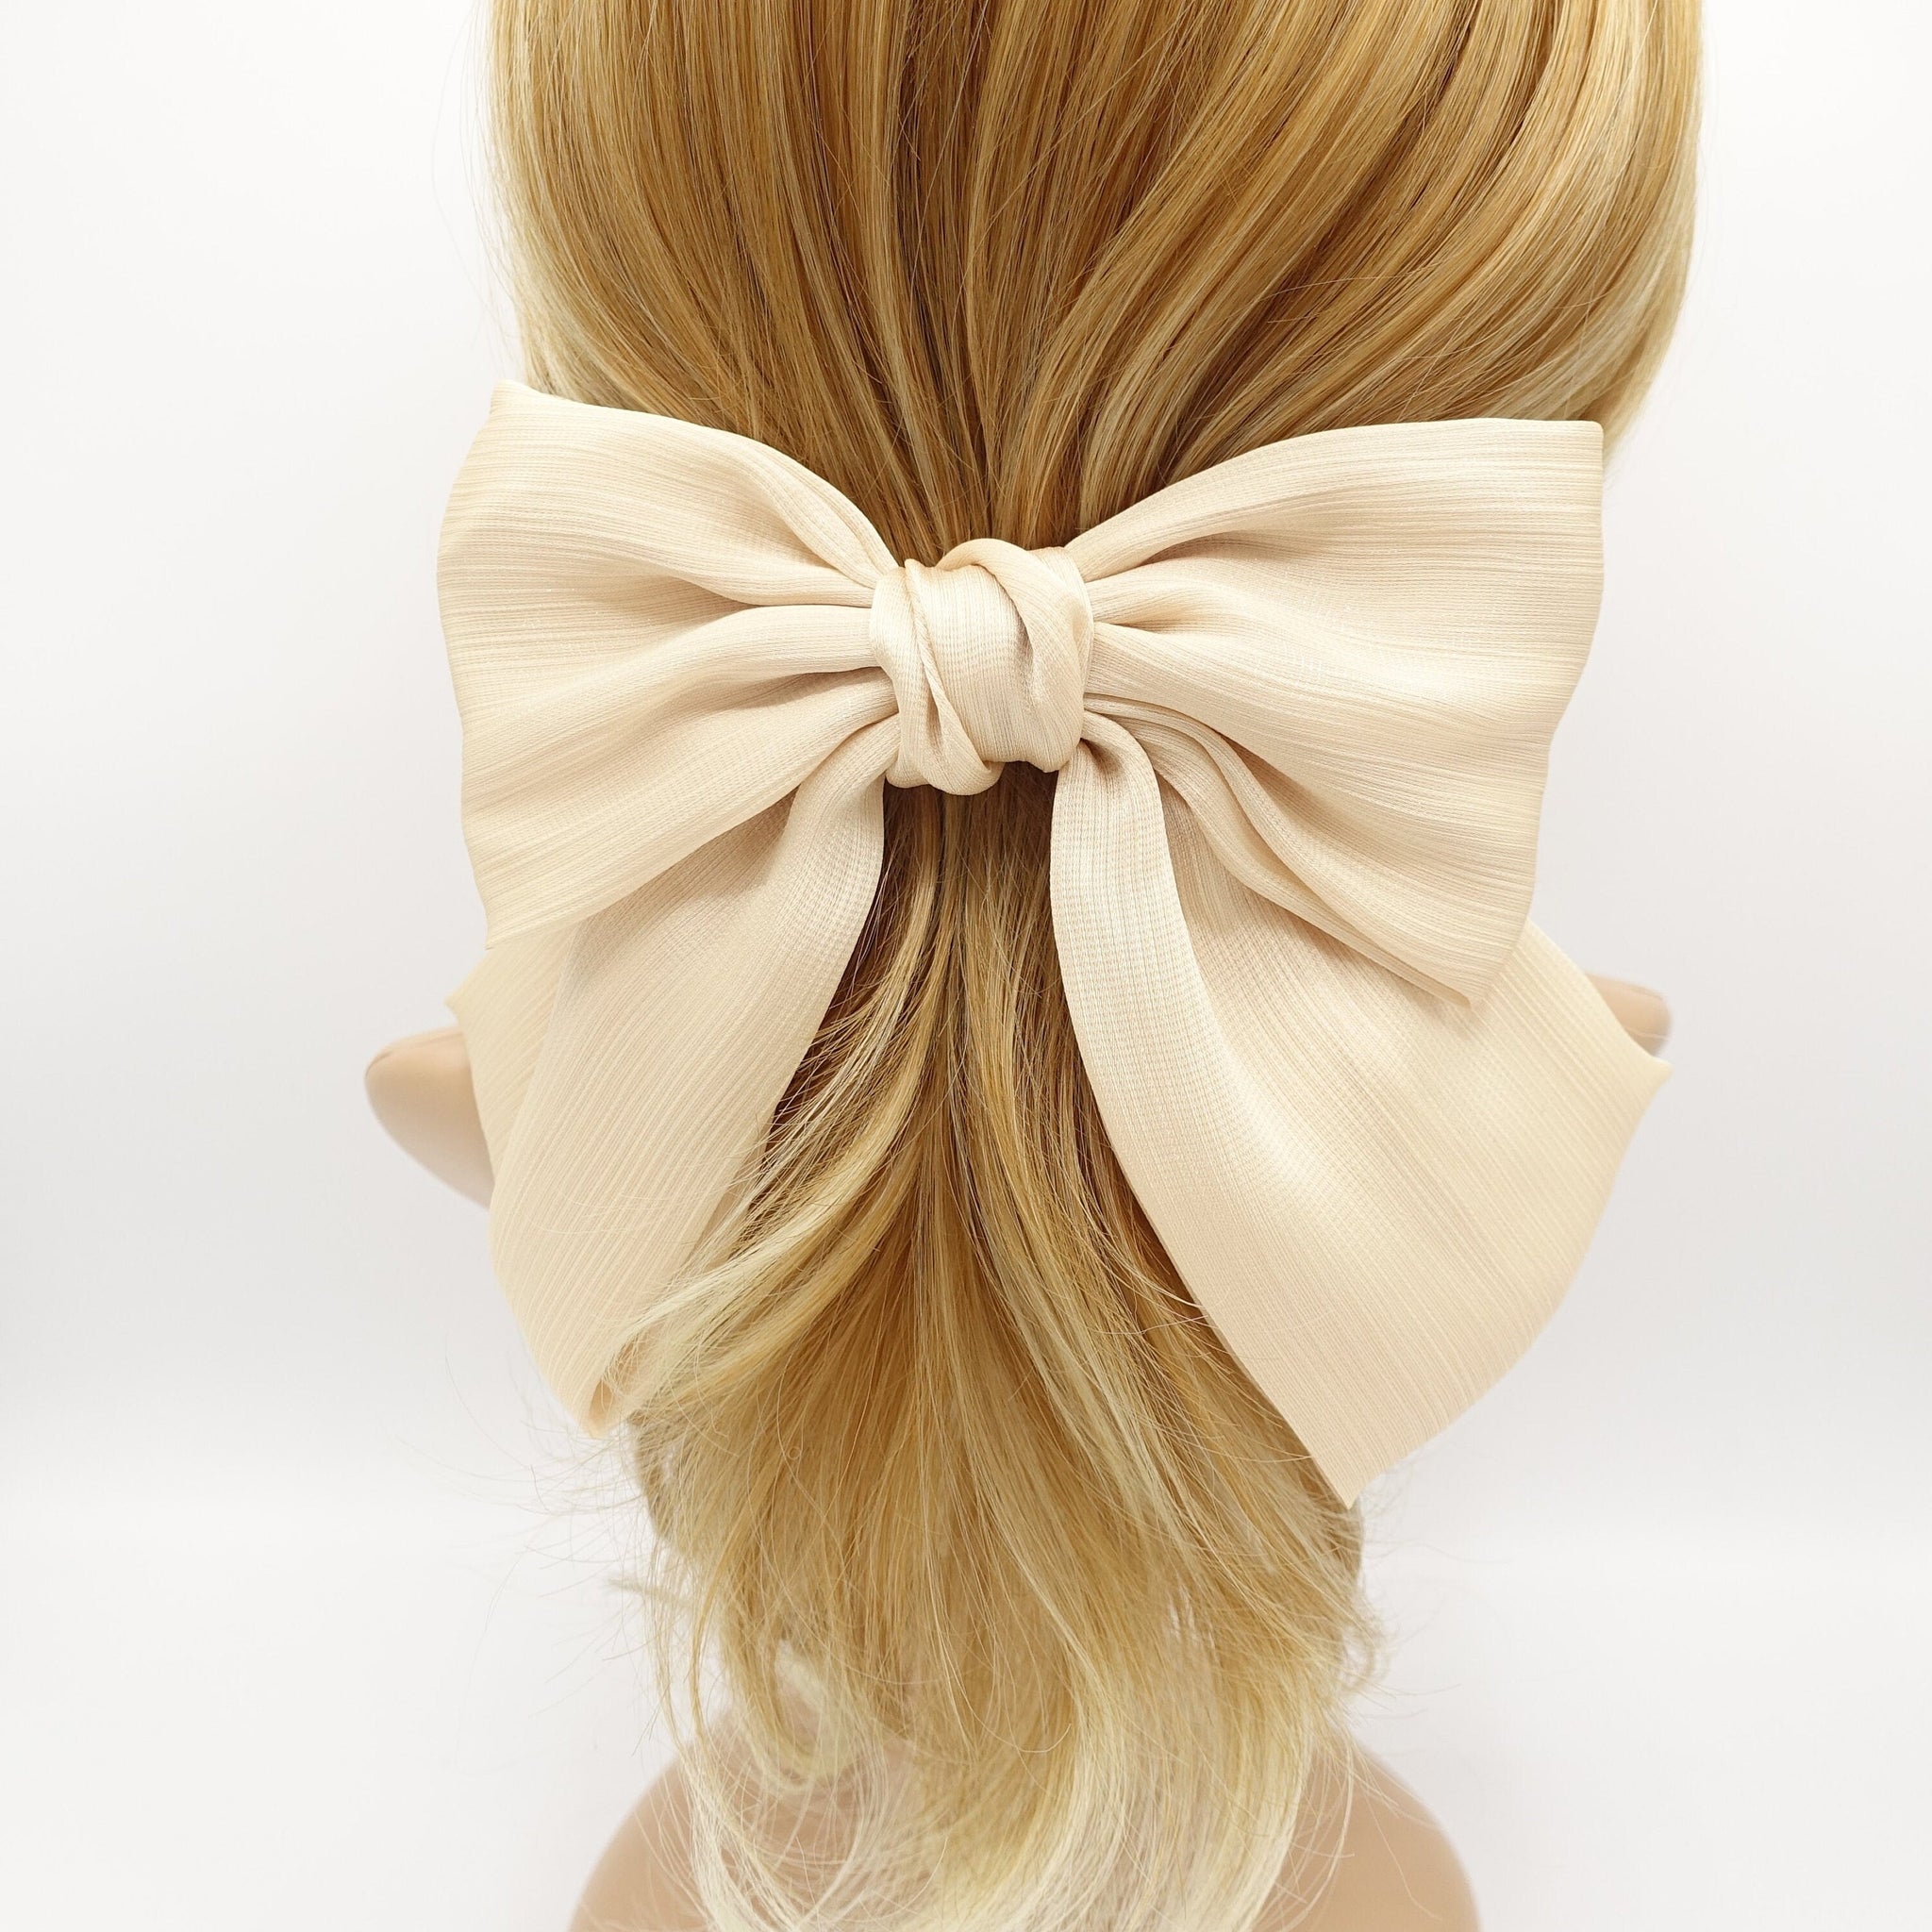 veryshine.com Barrette (Bow) Beige pearl glossy crinkled satin bow french hair barrette women hair accessory